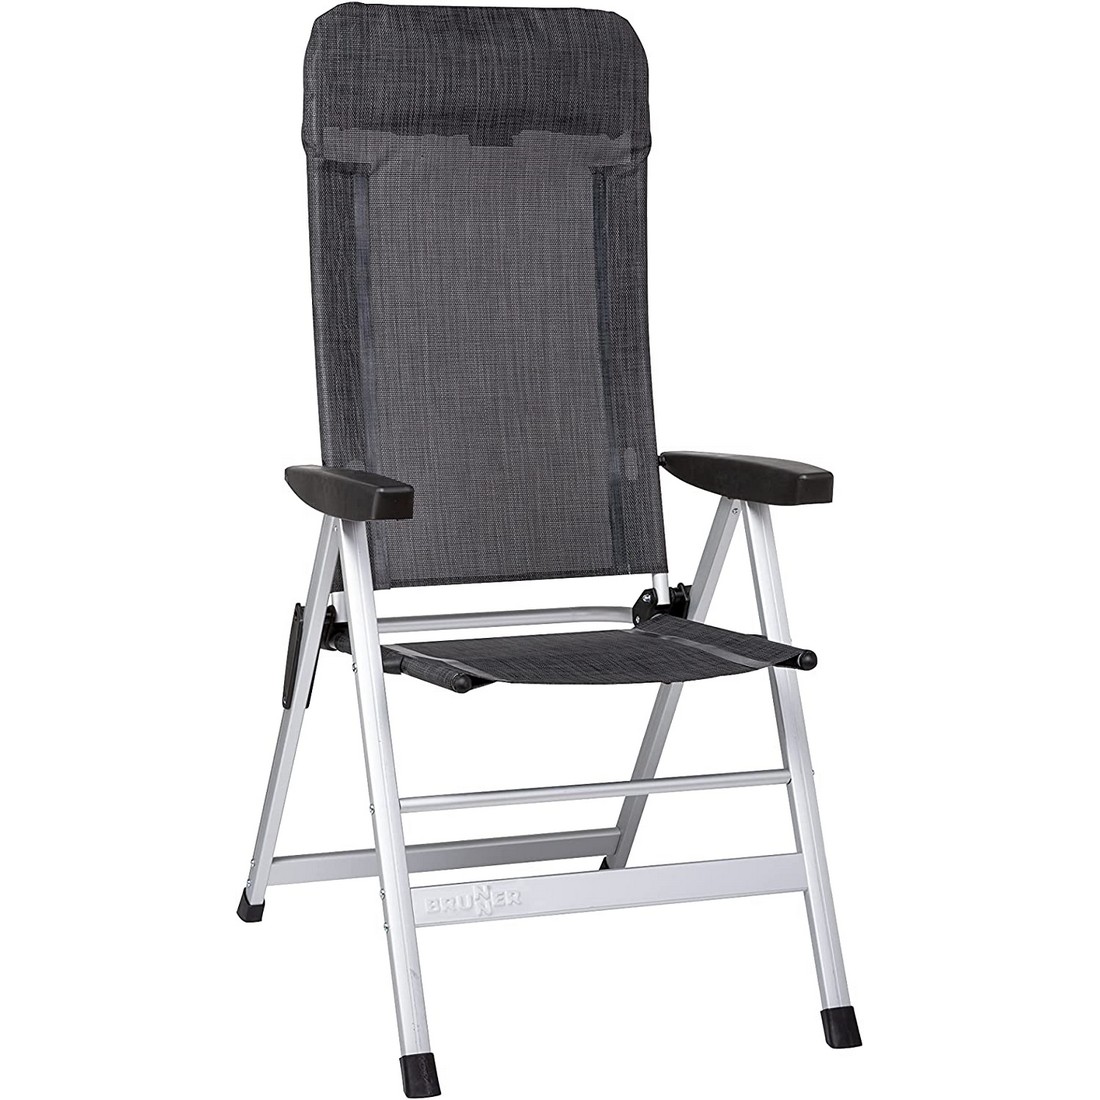 Brunner - Anthracite SKYE chair - Max load: 120 kg - Measurements: 46.5 x 42 x H48/124 cm